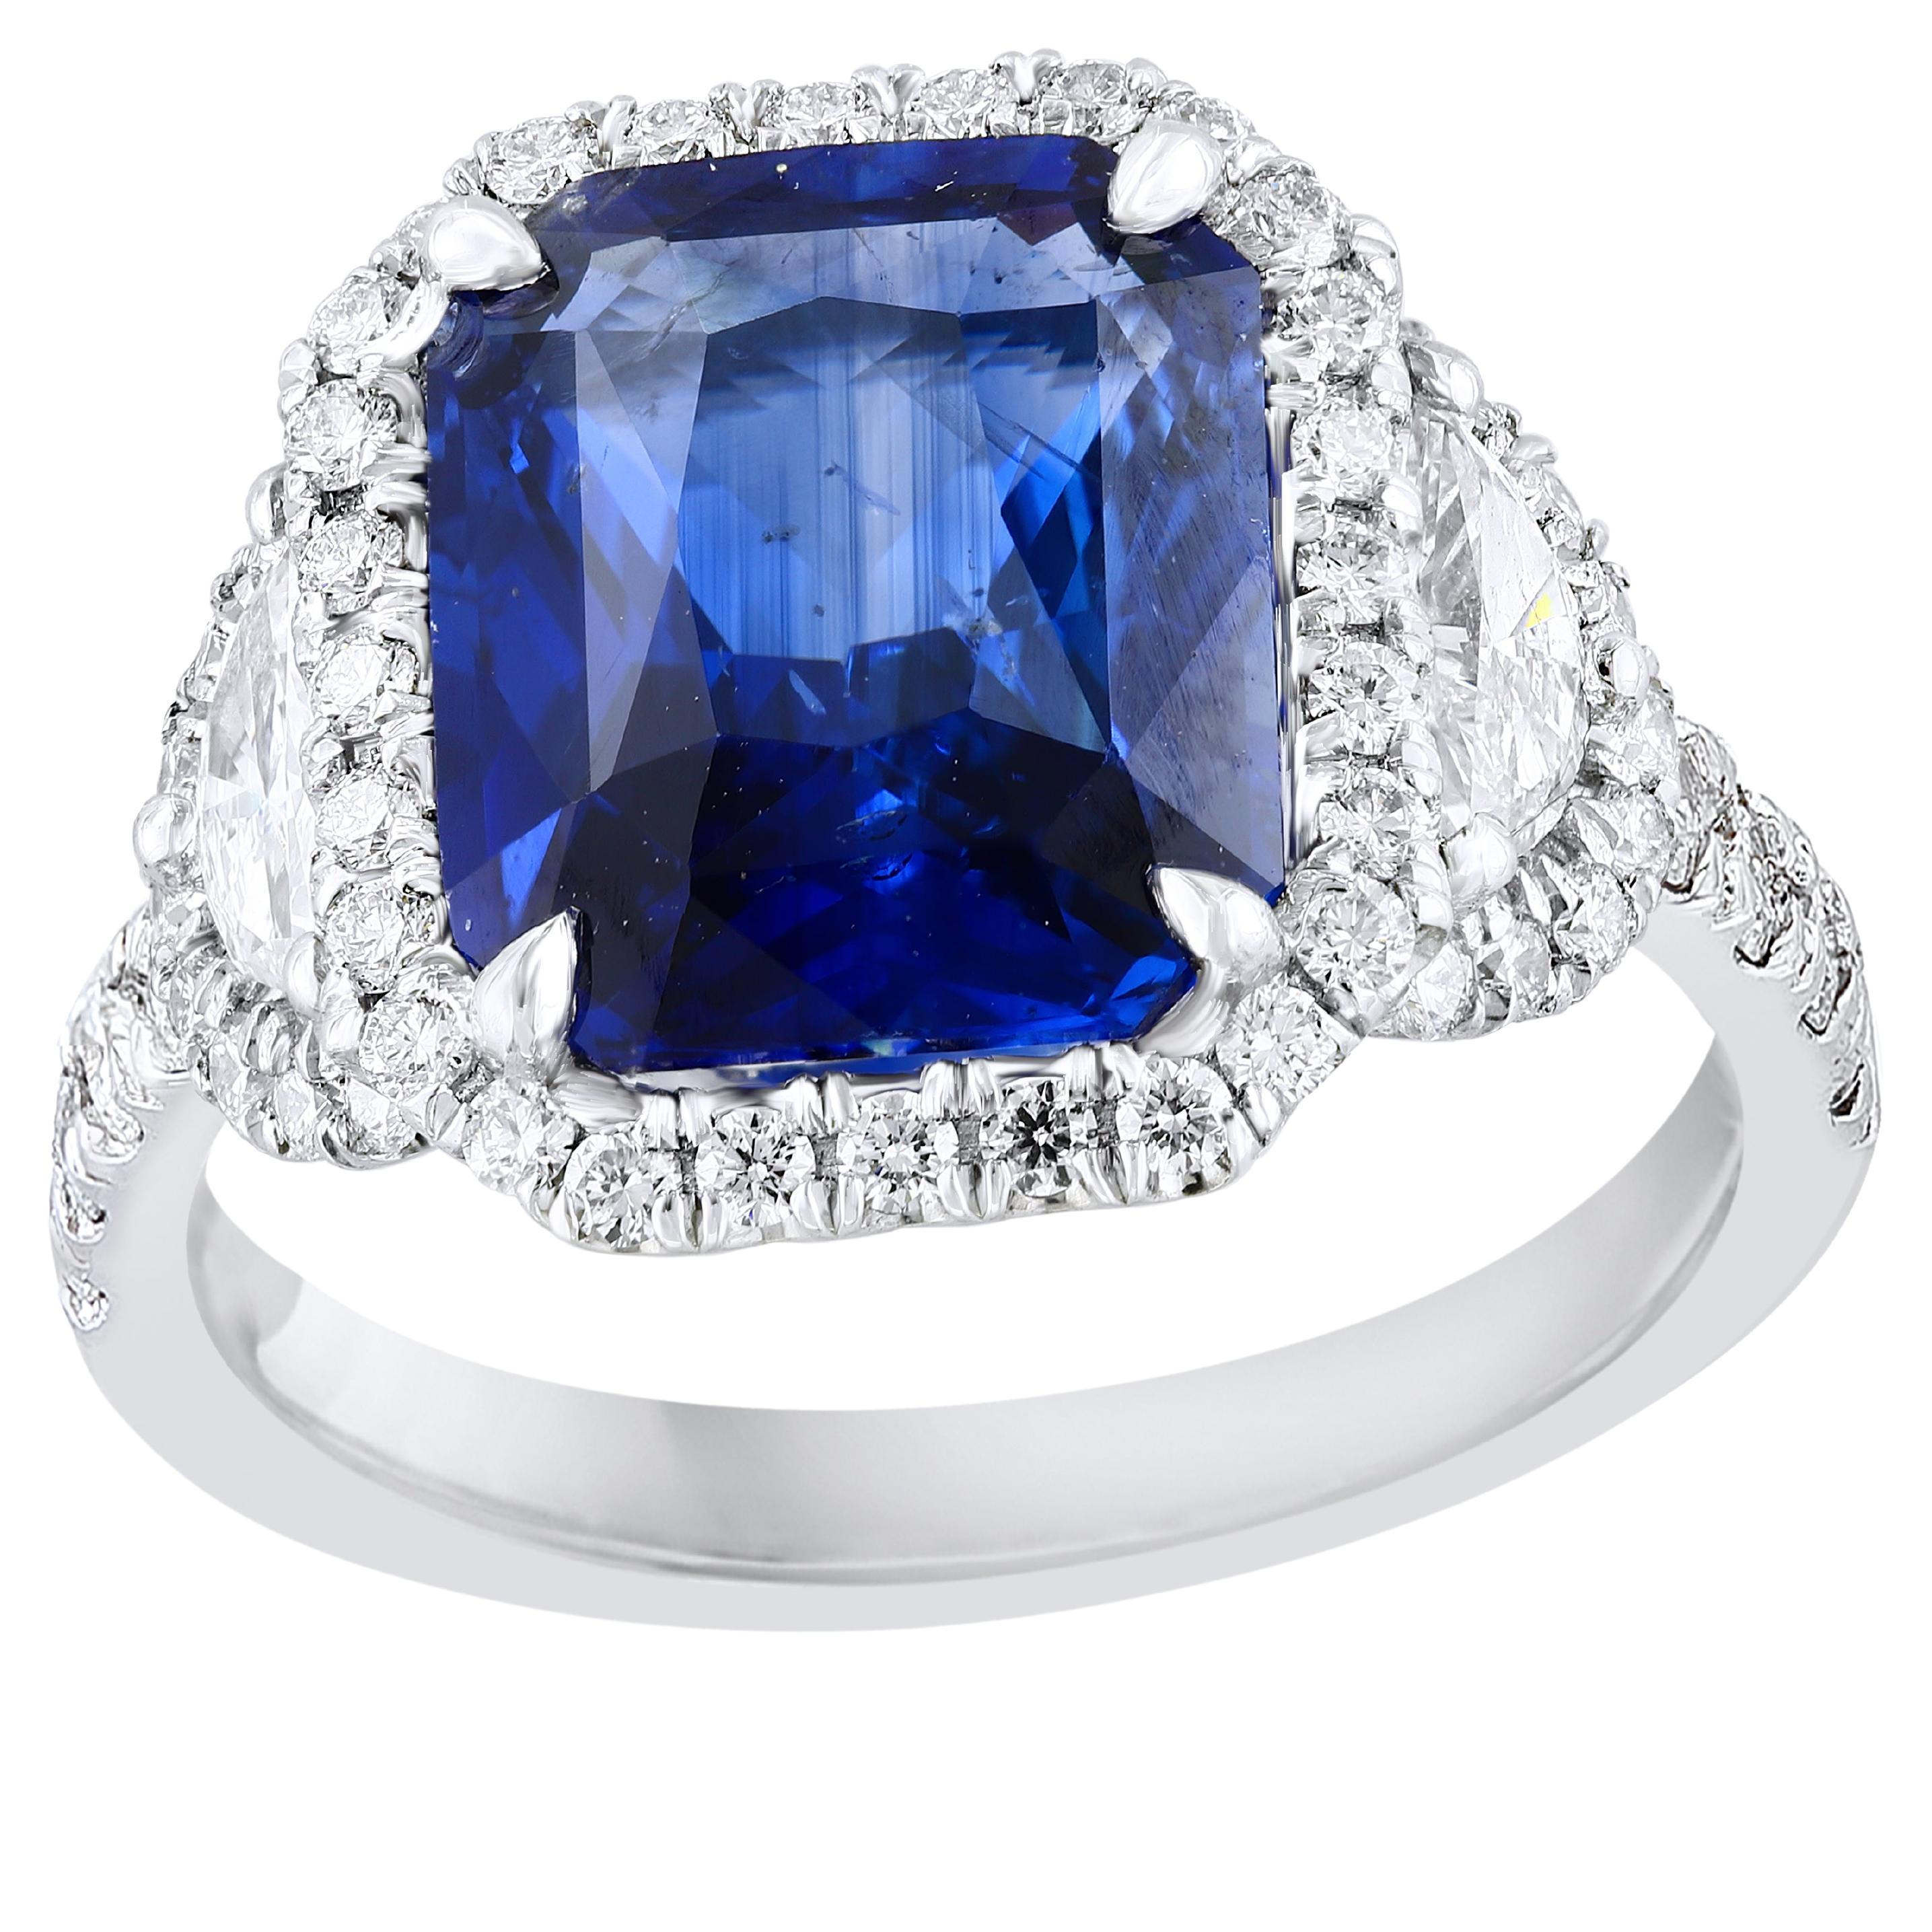 GIA Certified 4.41 Carat Emerald Cut Sapphire Diamond 3 Stone Ring in Platinum